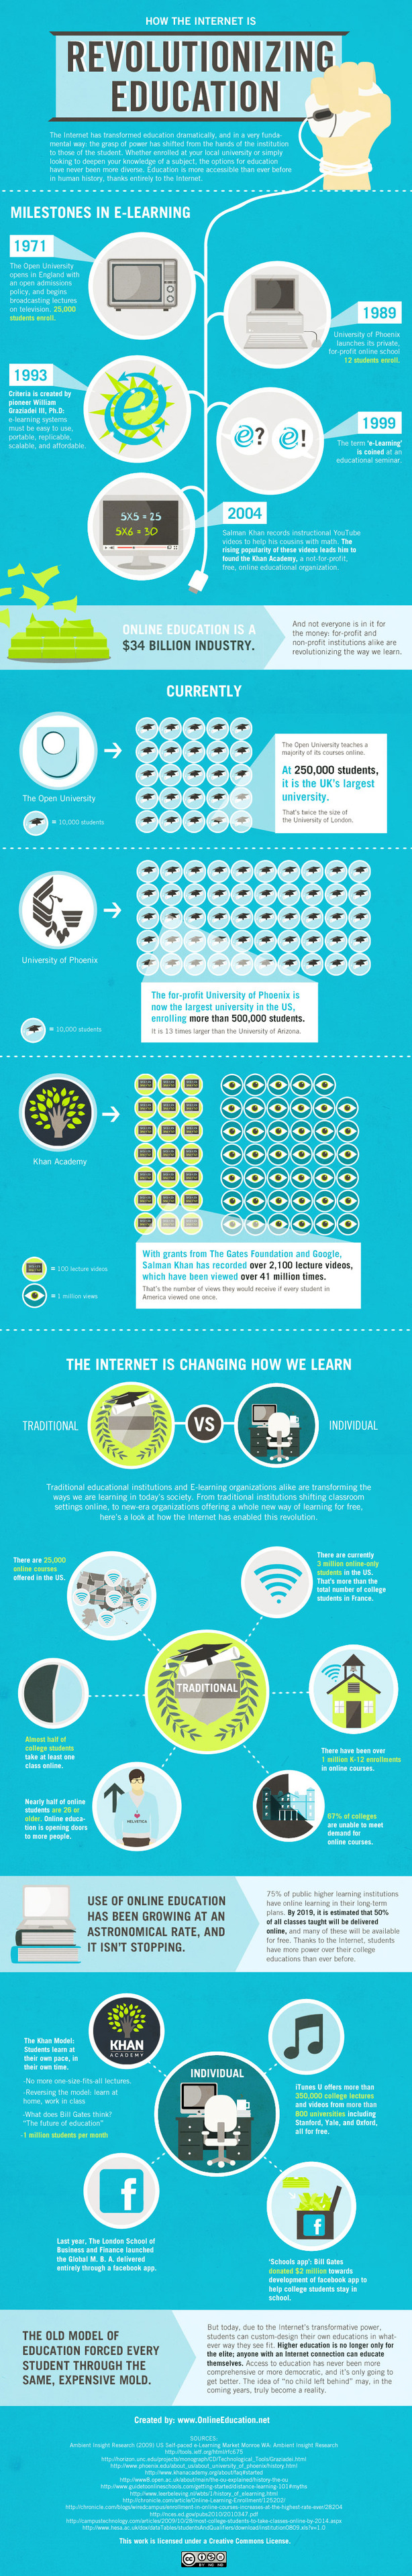 internet-revolutionizing-education.jpg